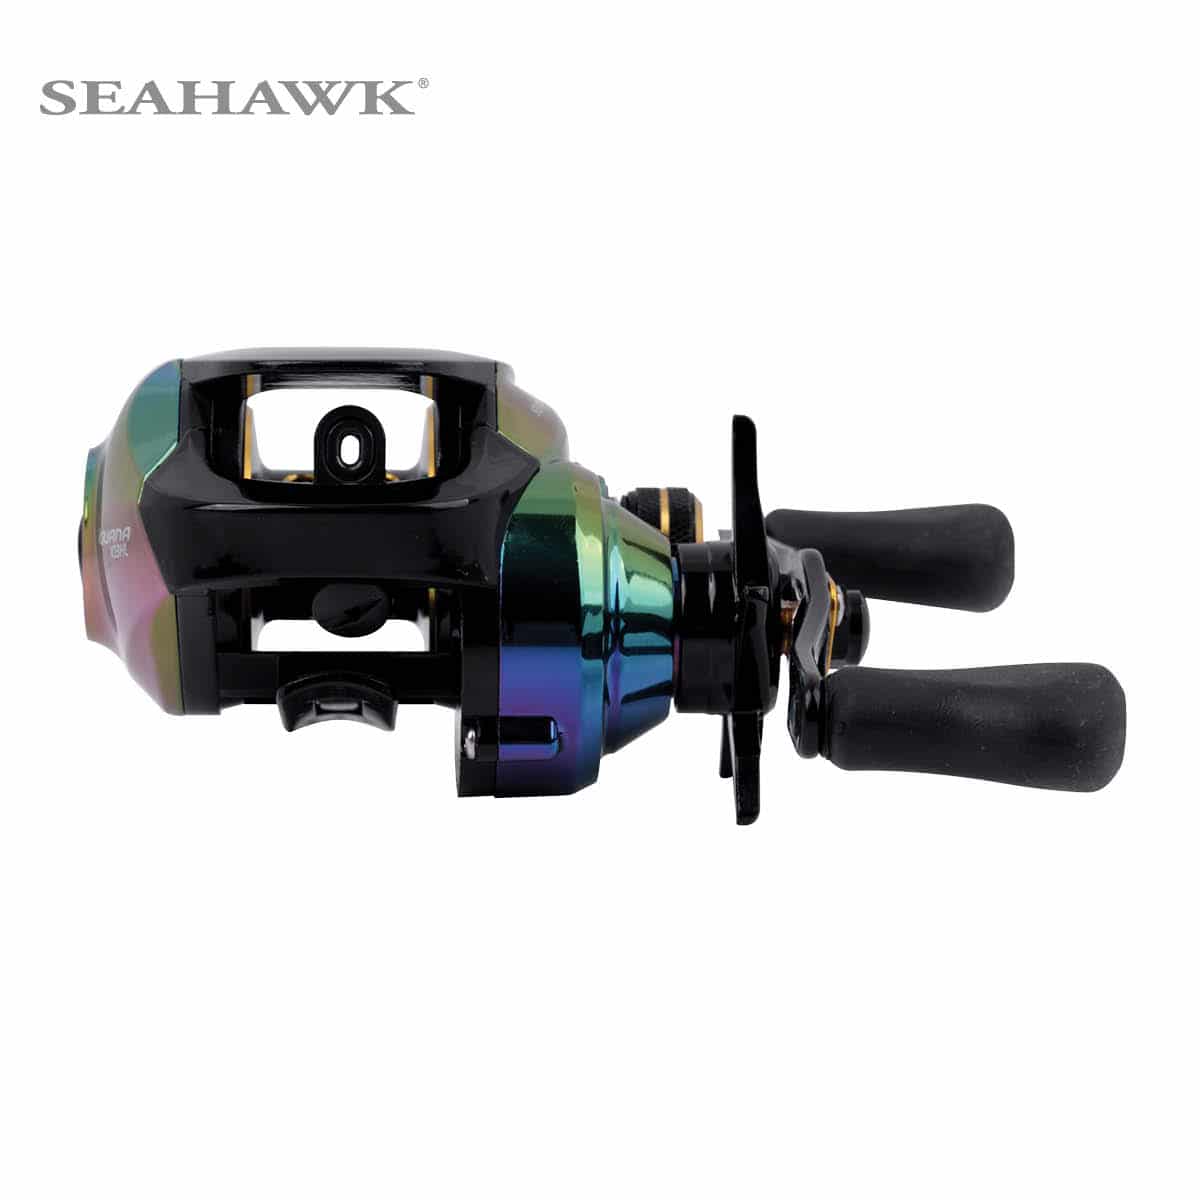 seahawk-iguana-05